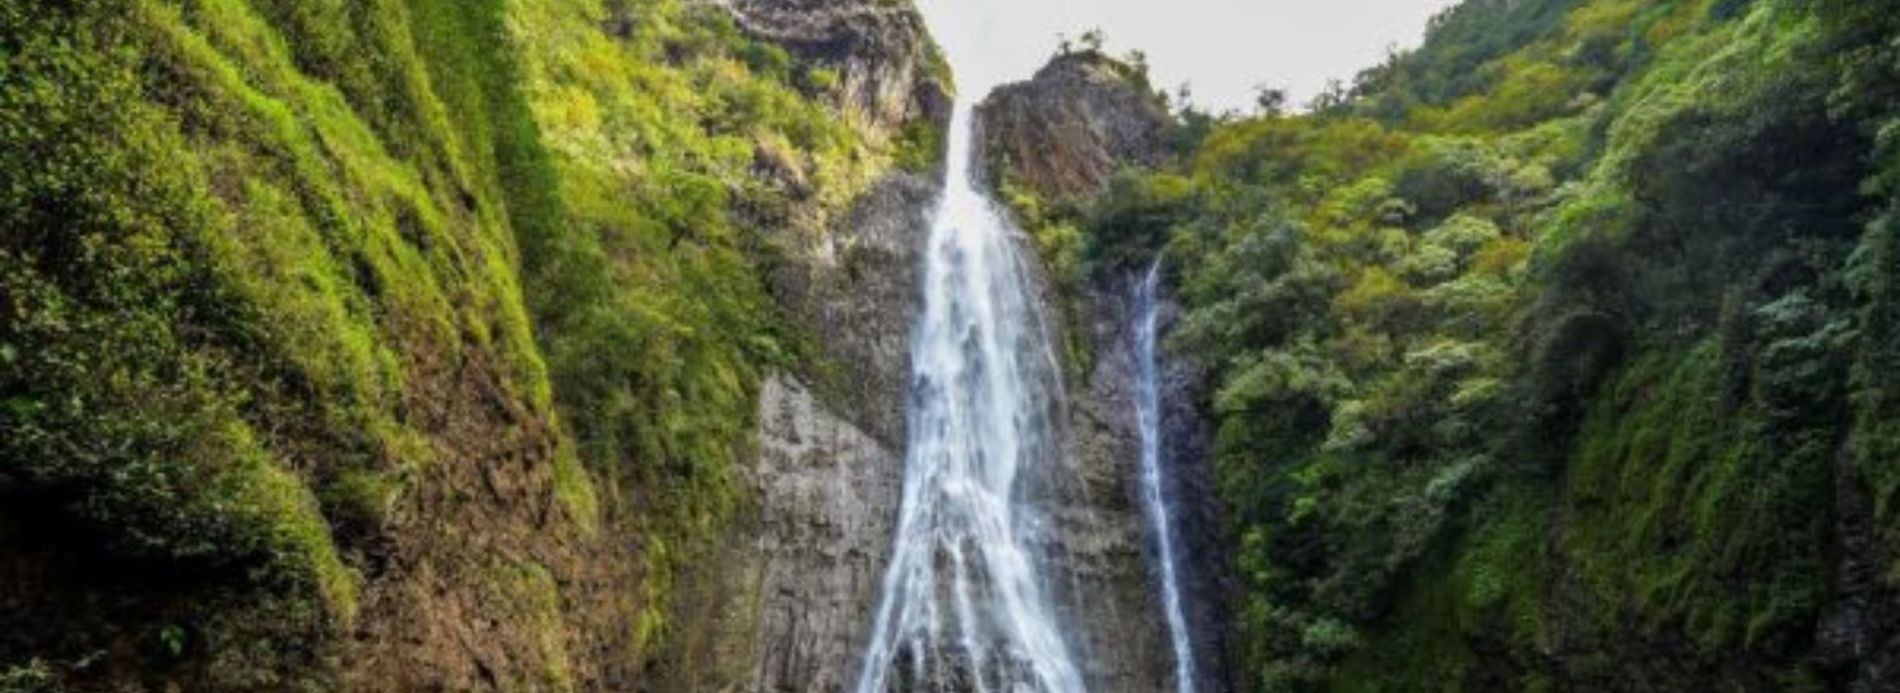 Waterfall in Hanapepe, located on Kauai Islands in Hawaii